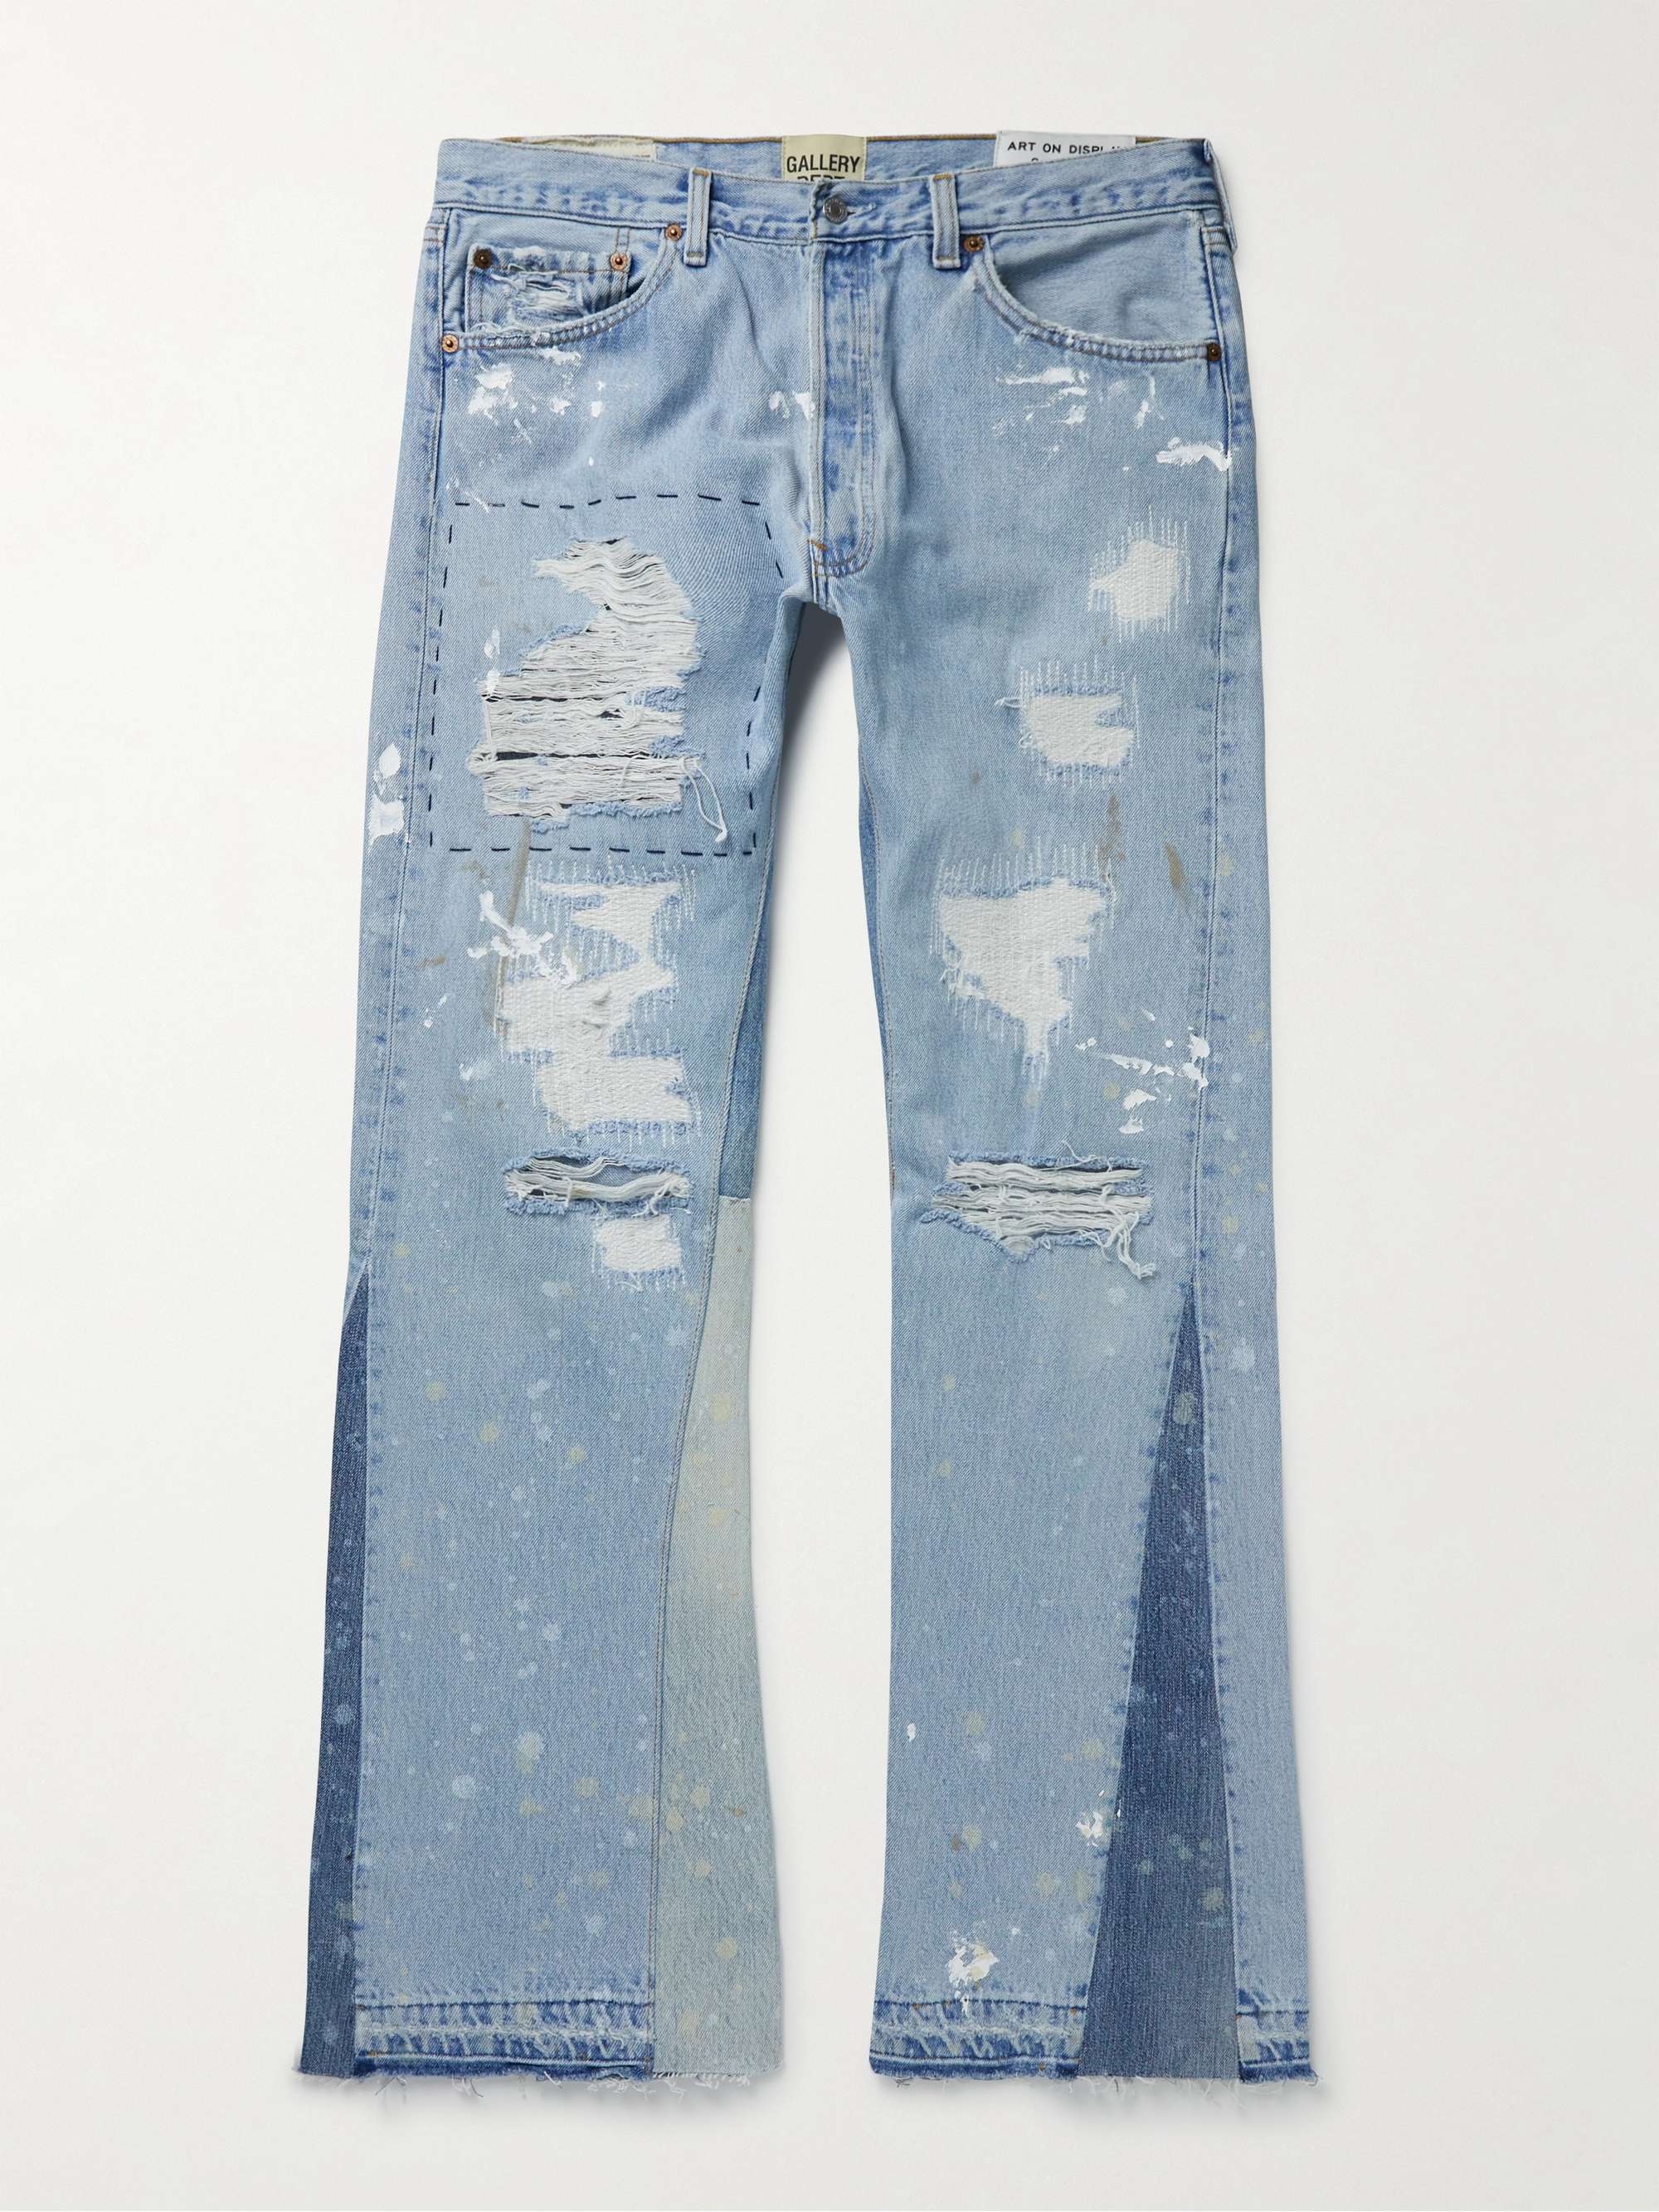 GALLERY DEPT. Indiana Flare Slim-Fit Distressed Jeans | MR PORTER